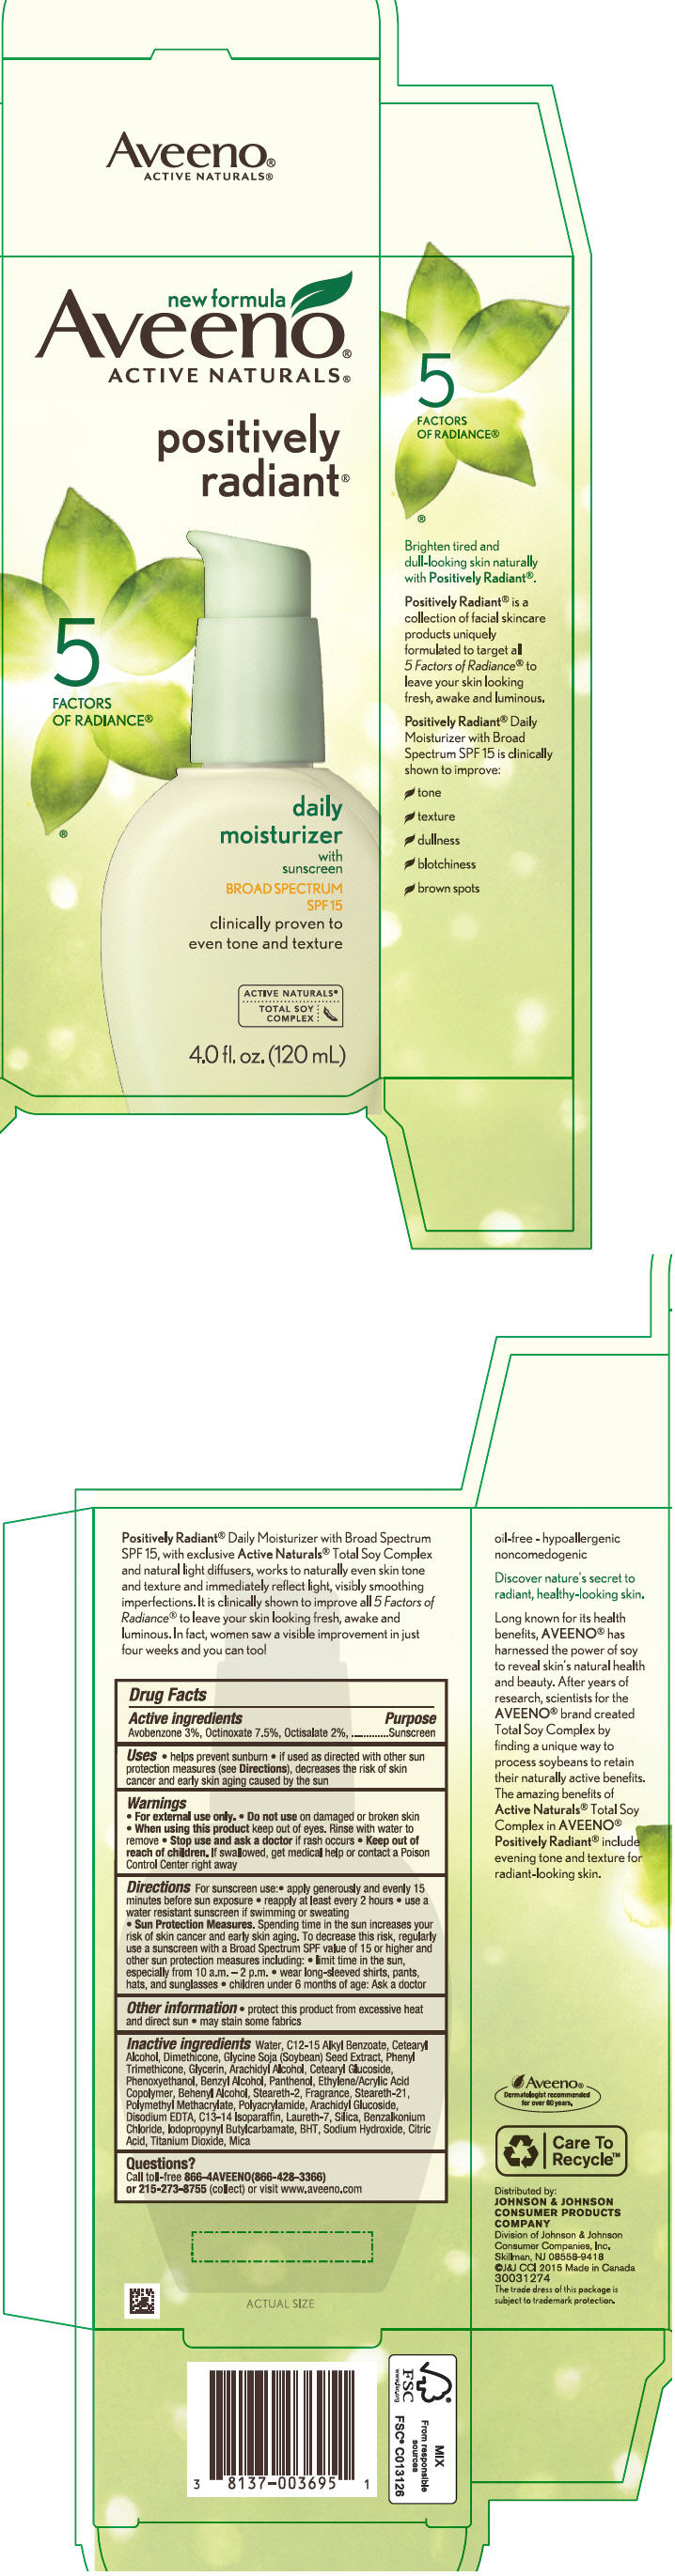 PRINCIPAL DISPLAY PANEL - 120 mL Bottle Carton